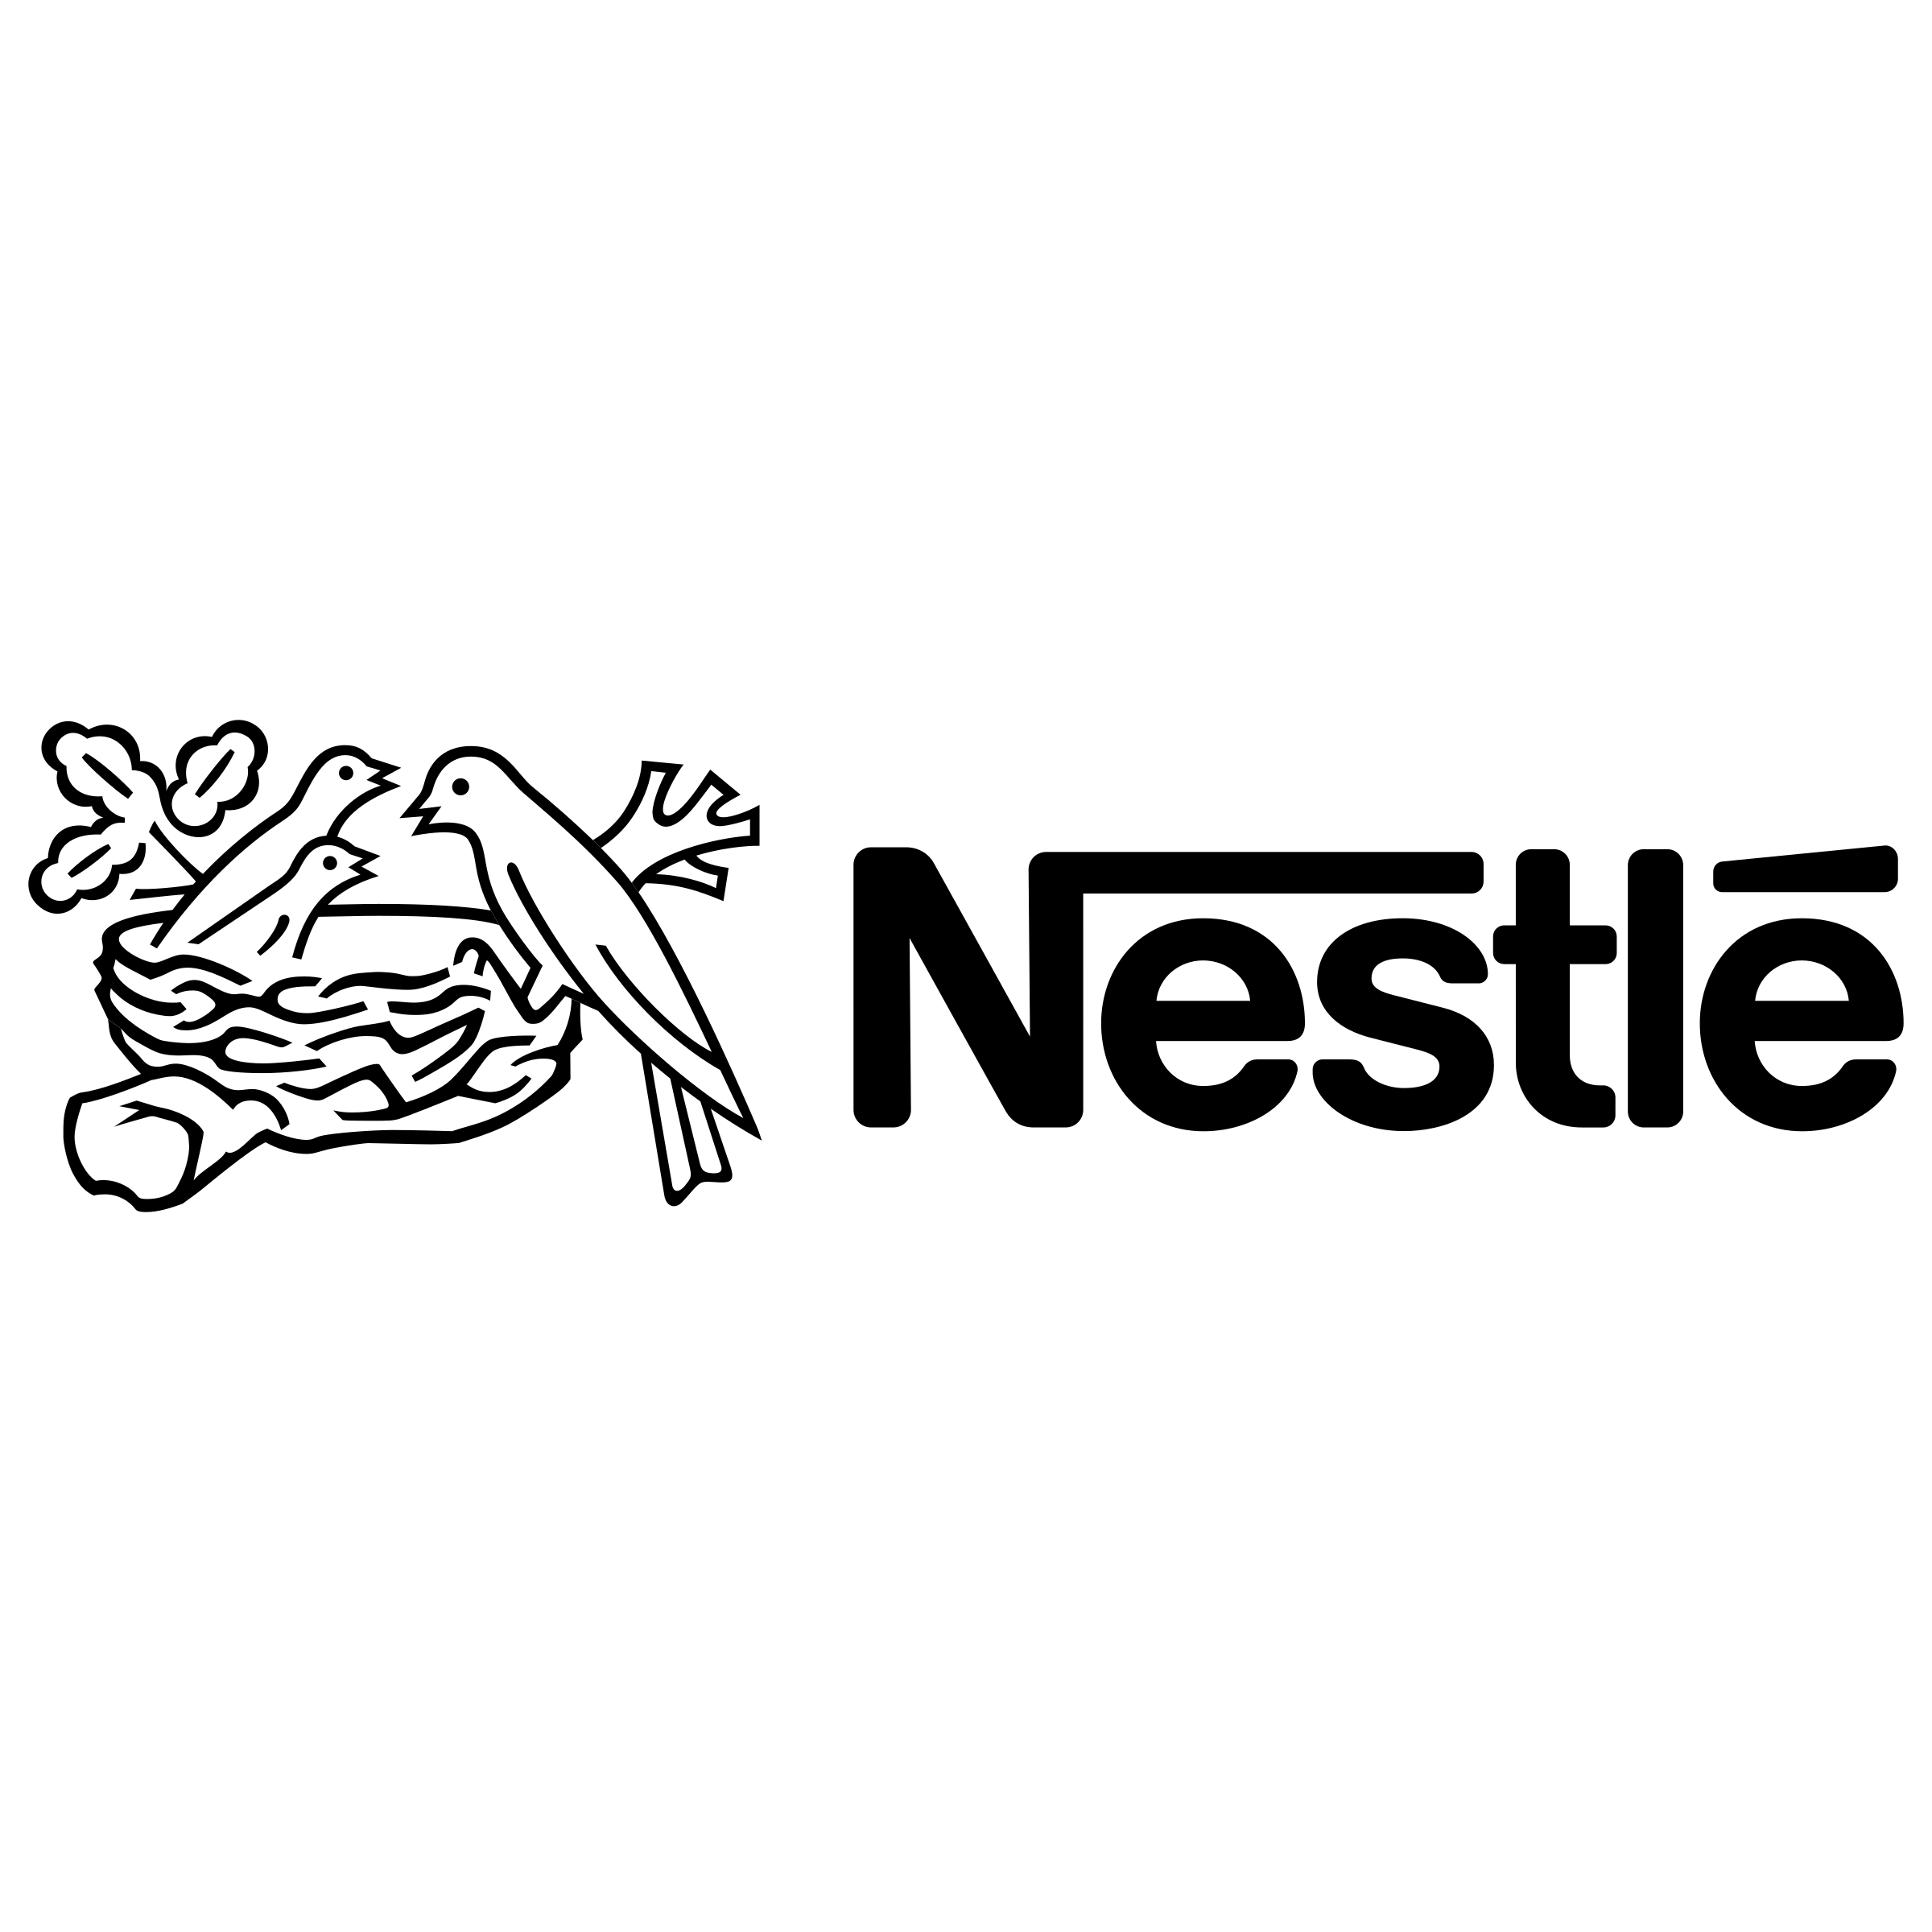 nestle-3-logo-black-and-white.png